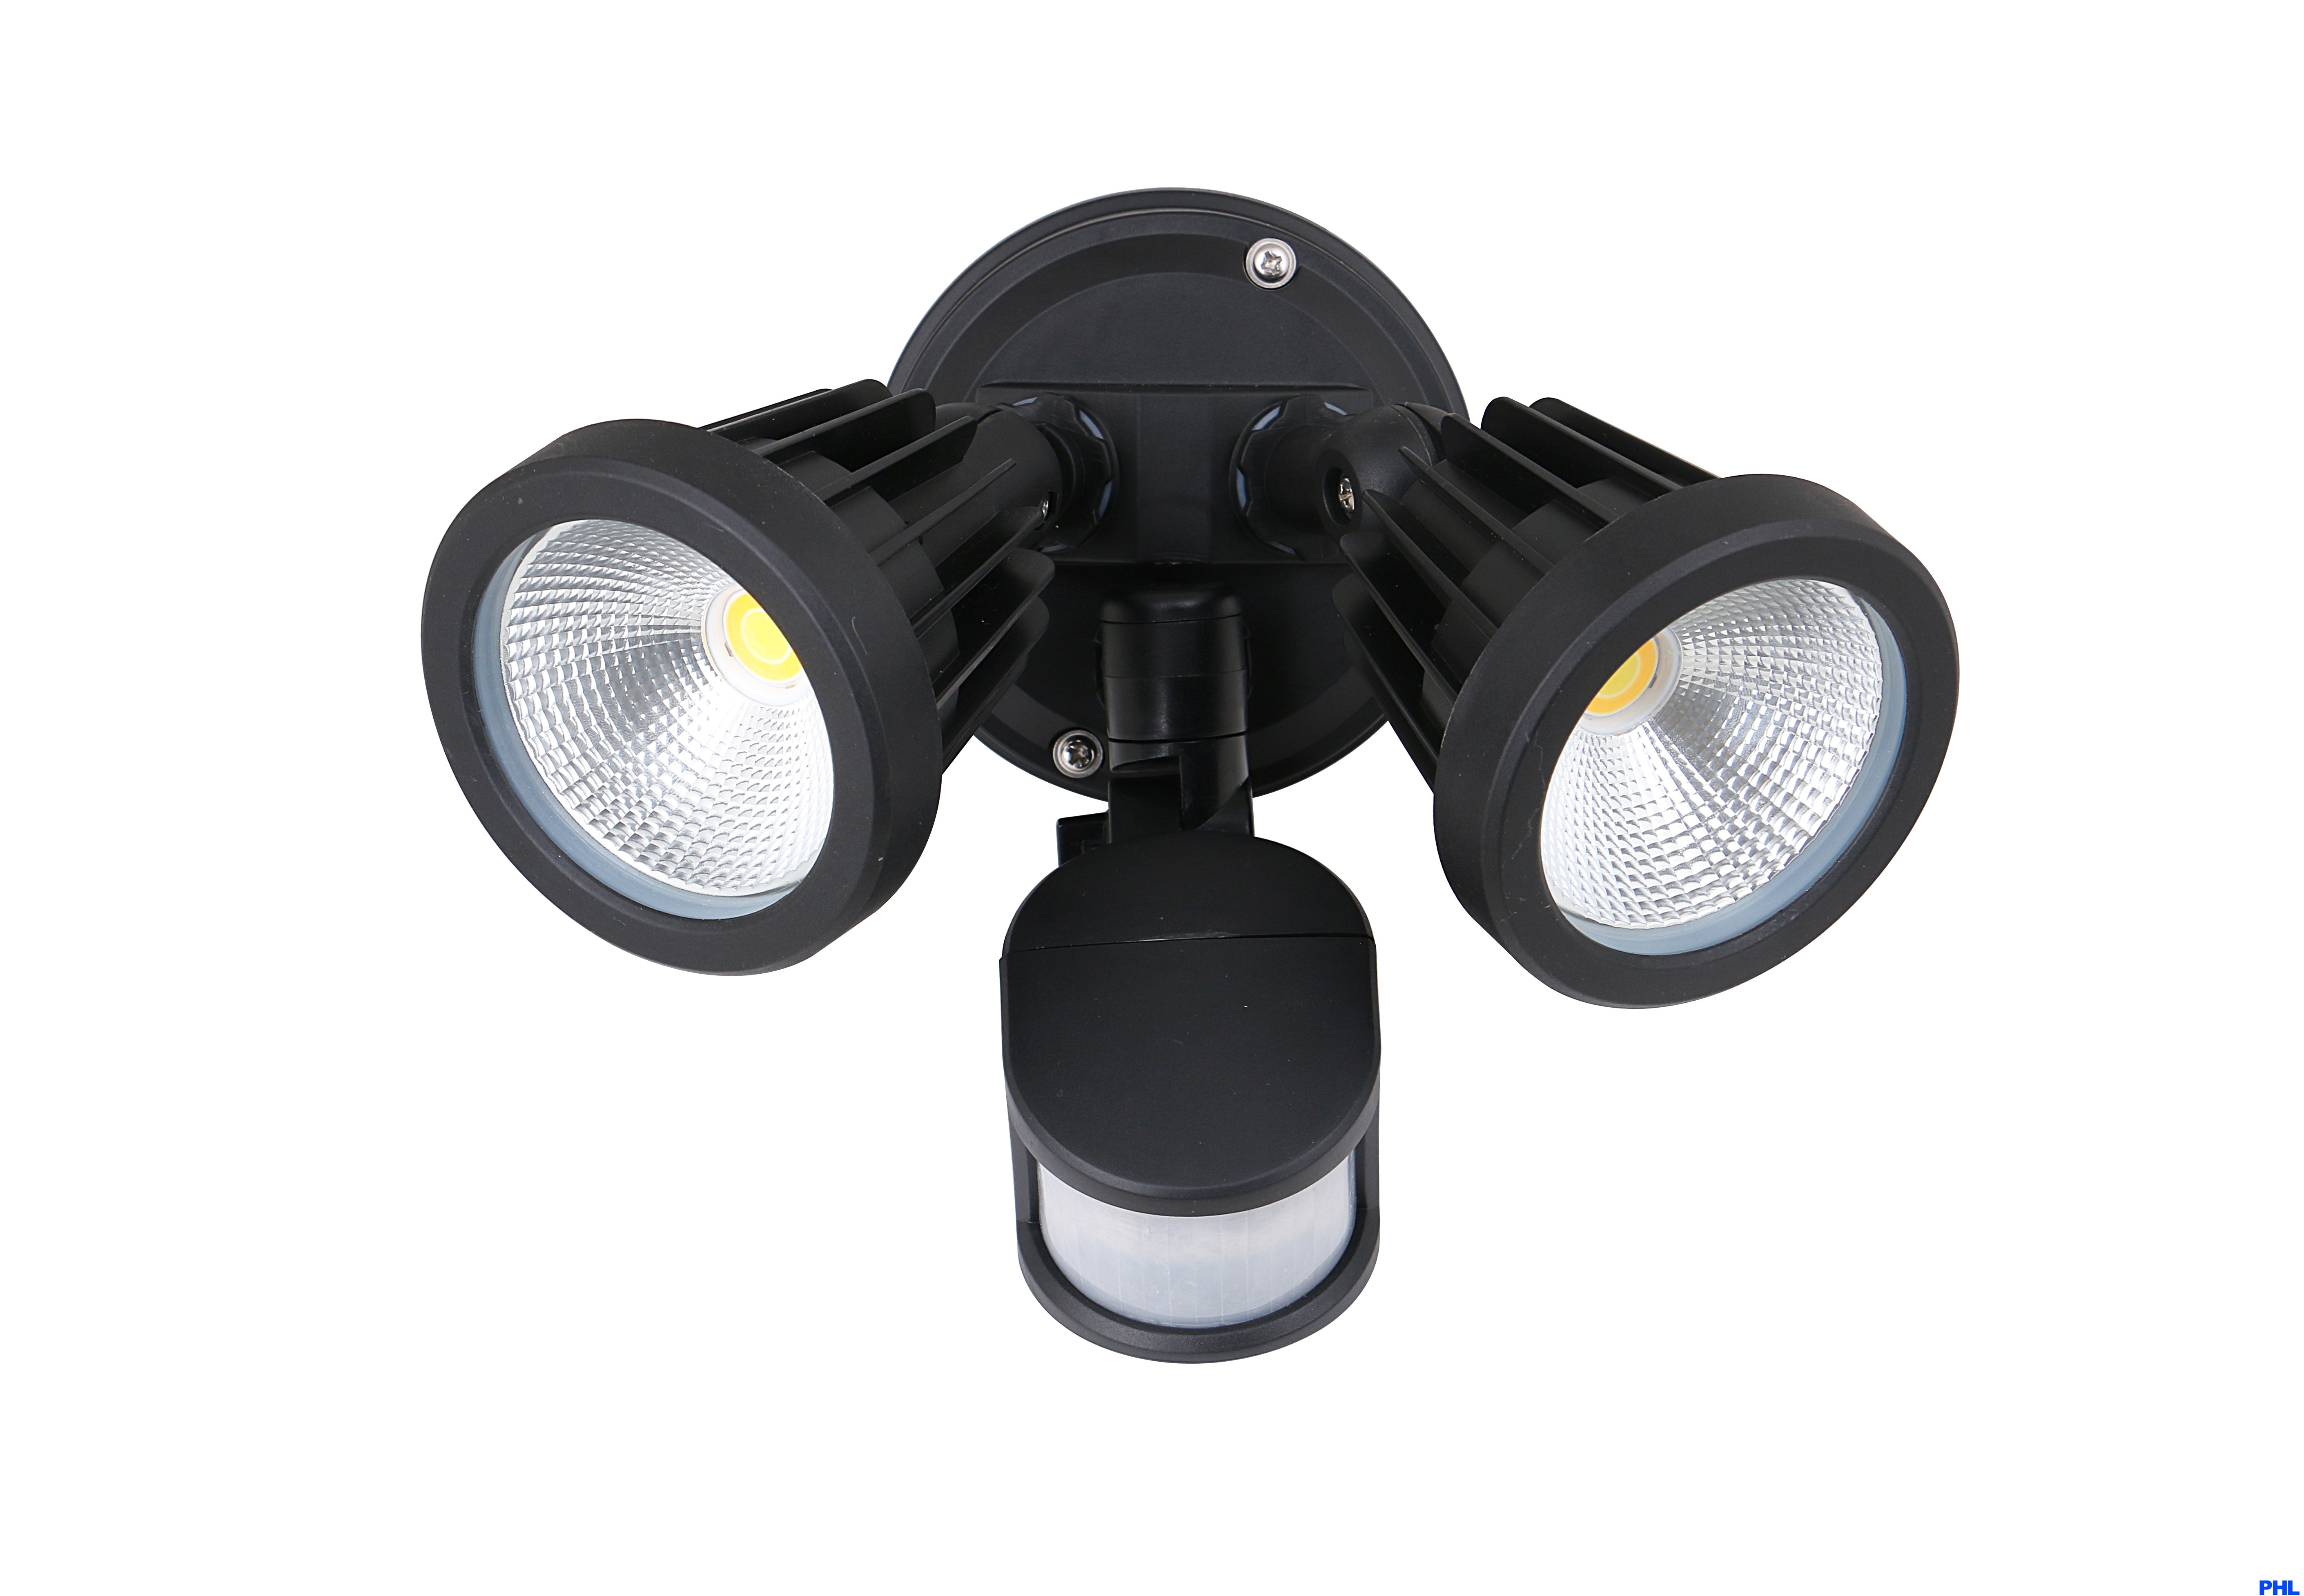 twin-led-spot-light-tri-colour-with-inbuilt-sensor-black-ip65-rated